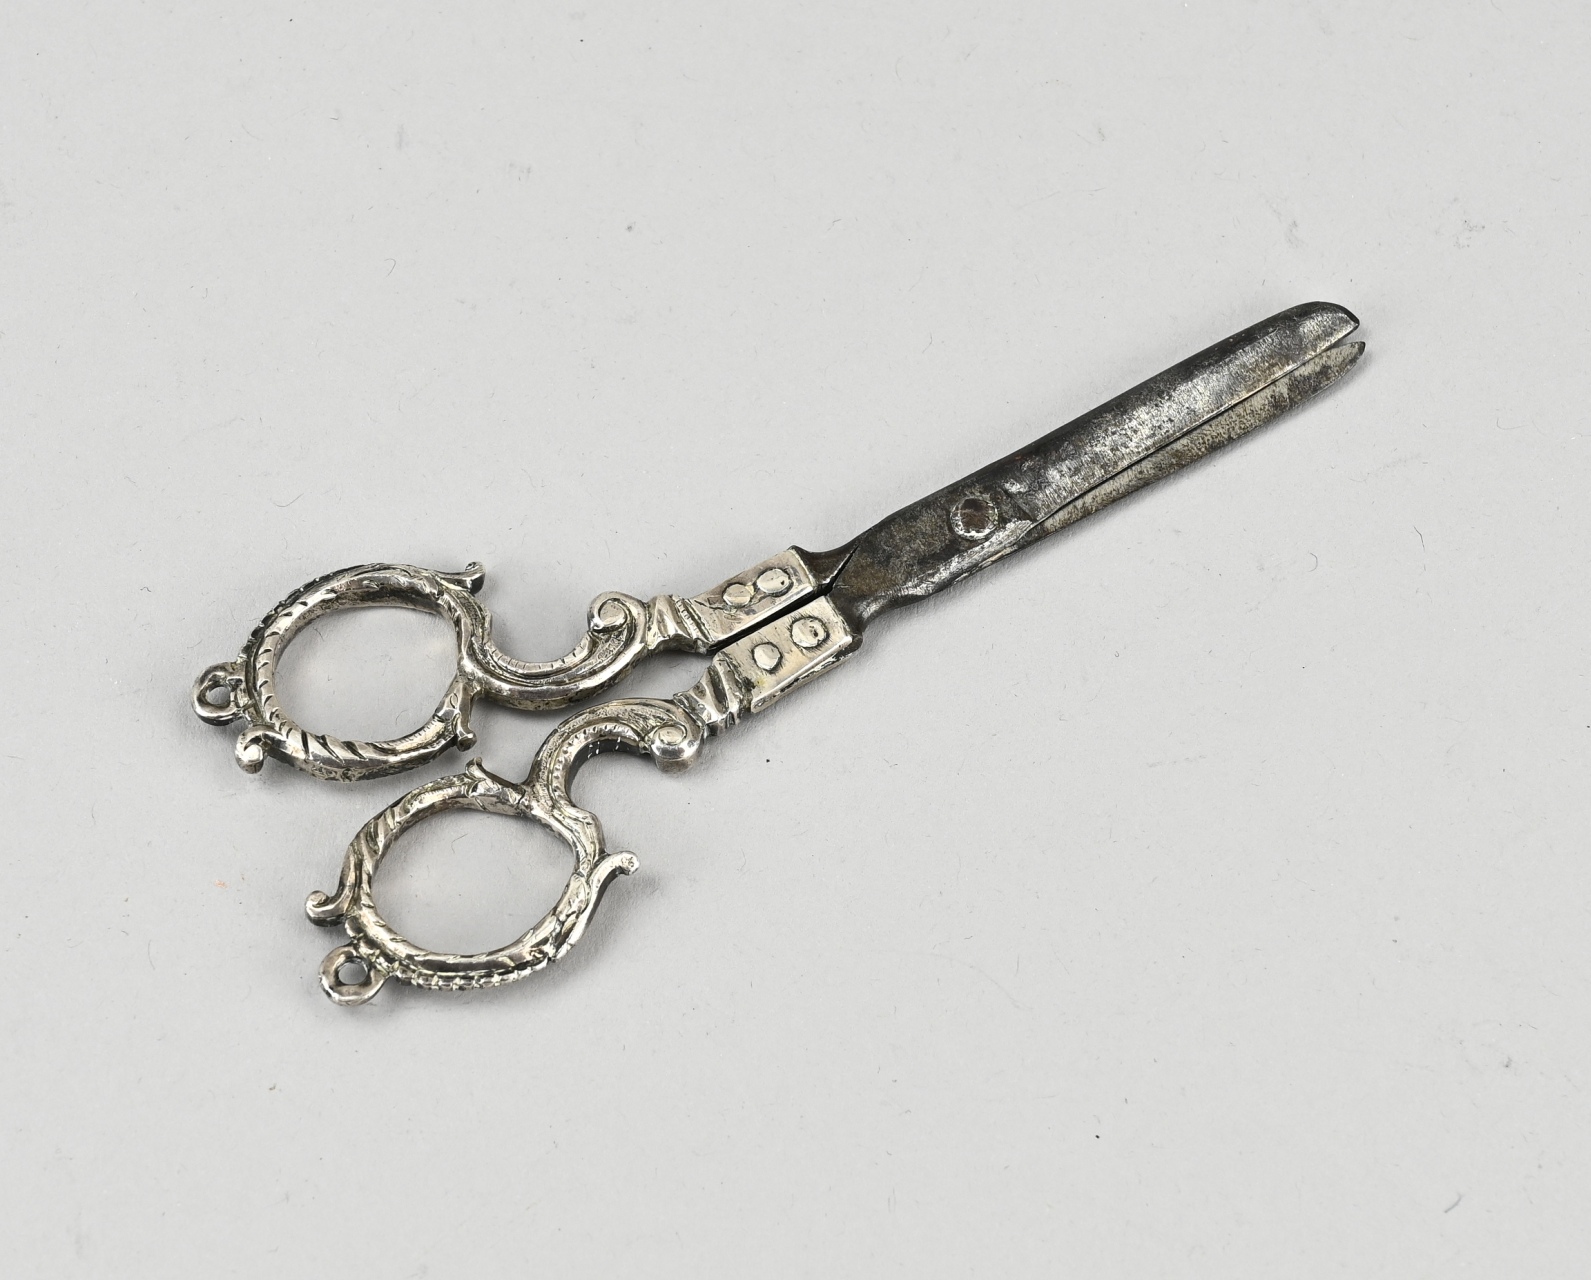 Frisian scissors